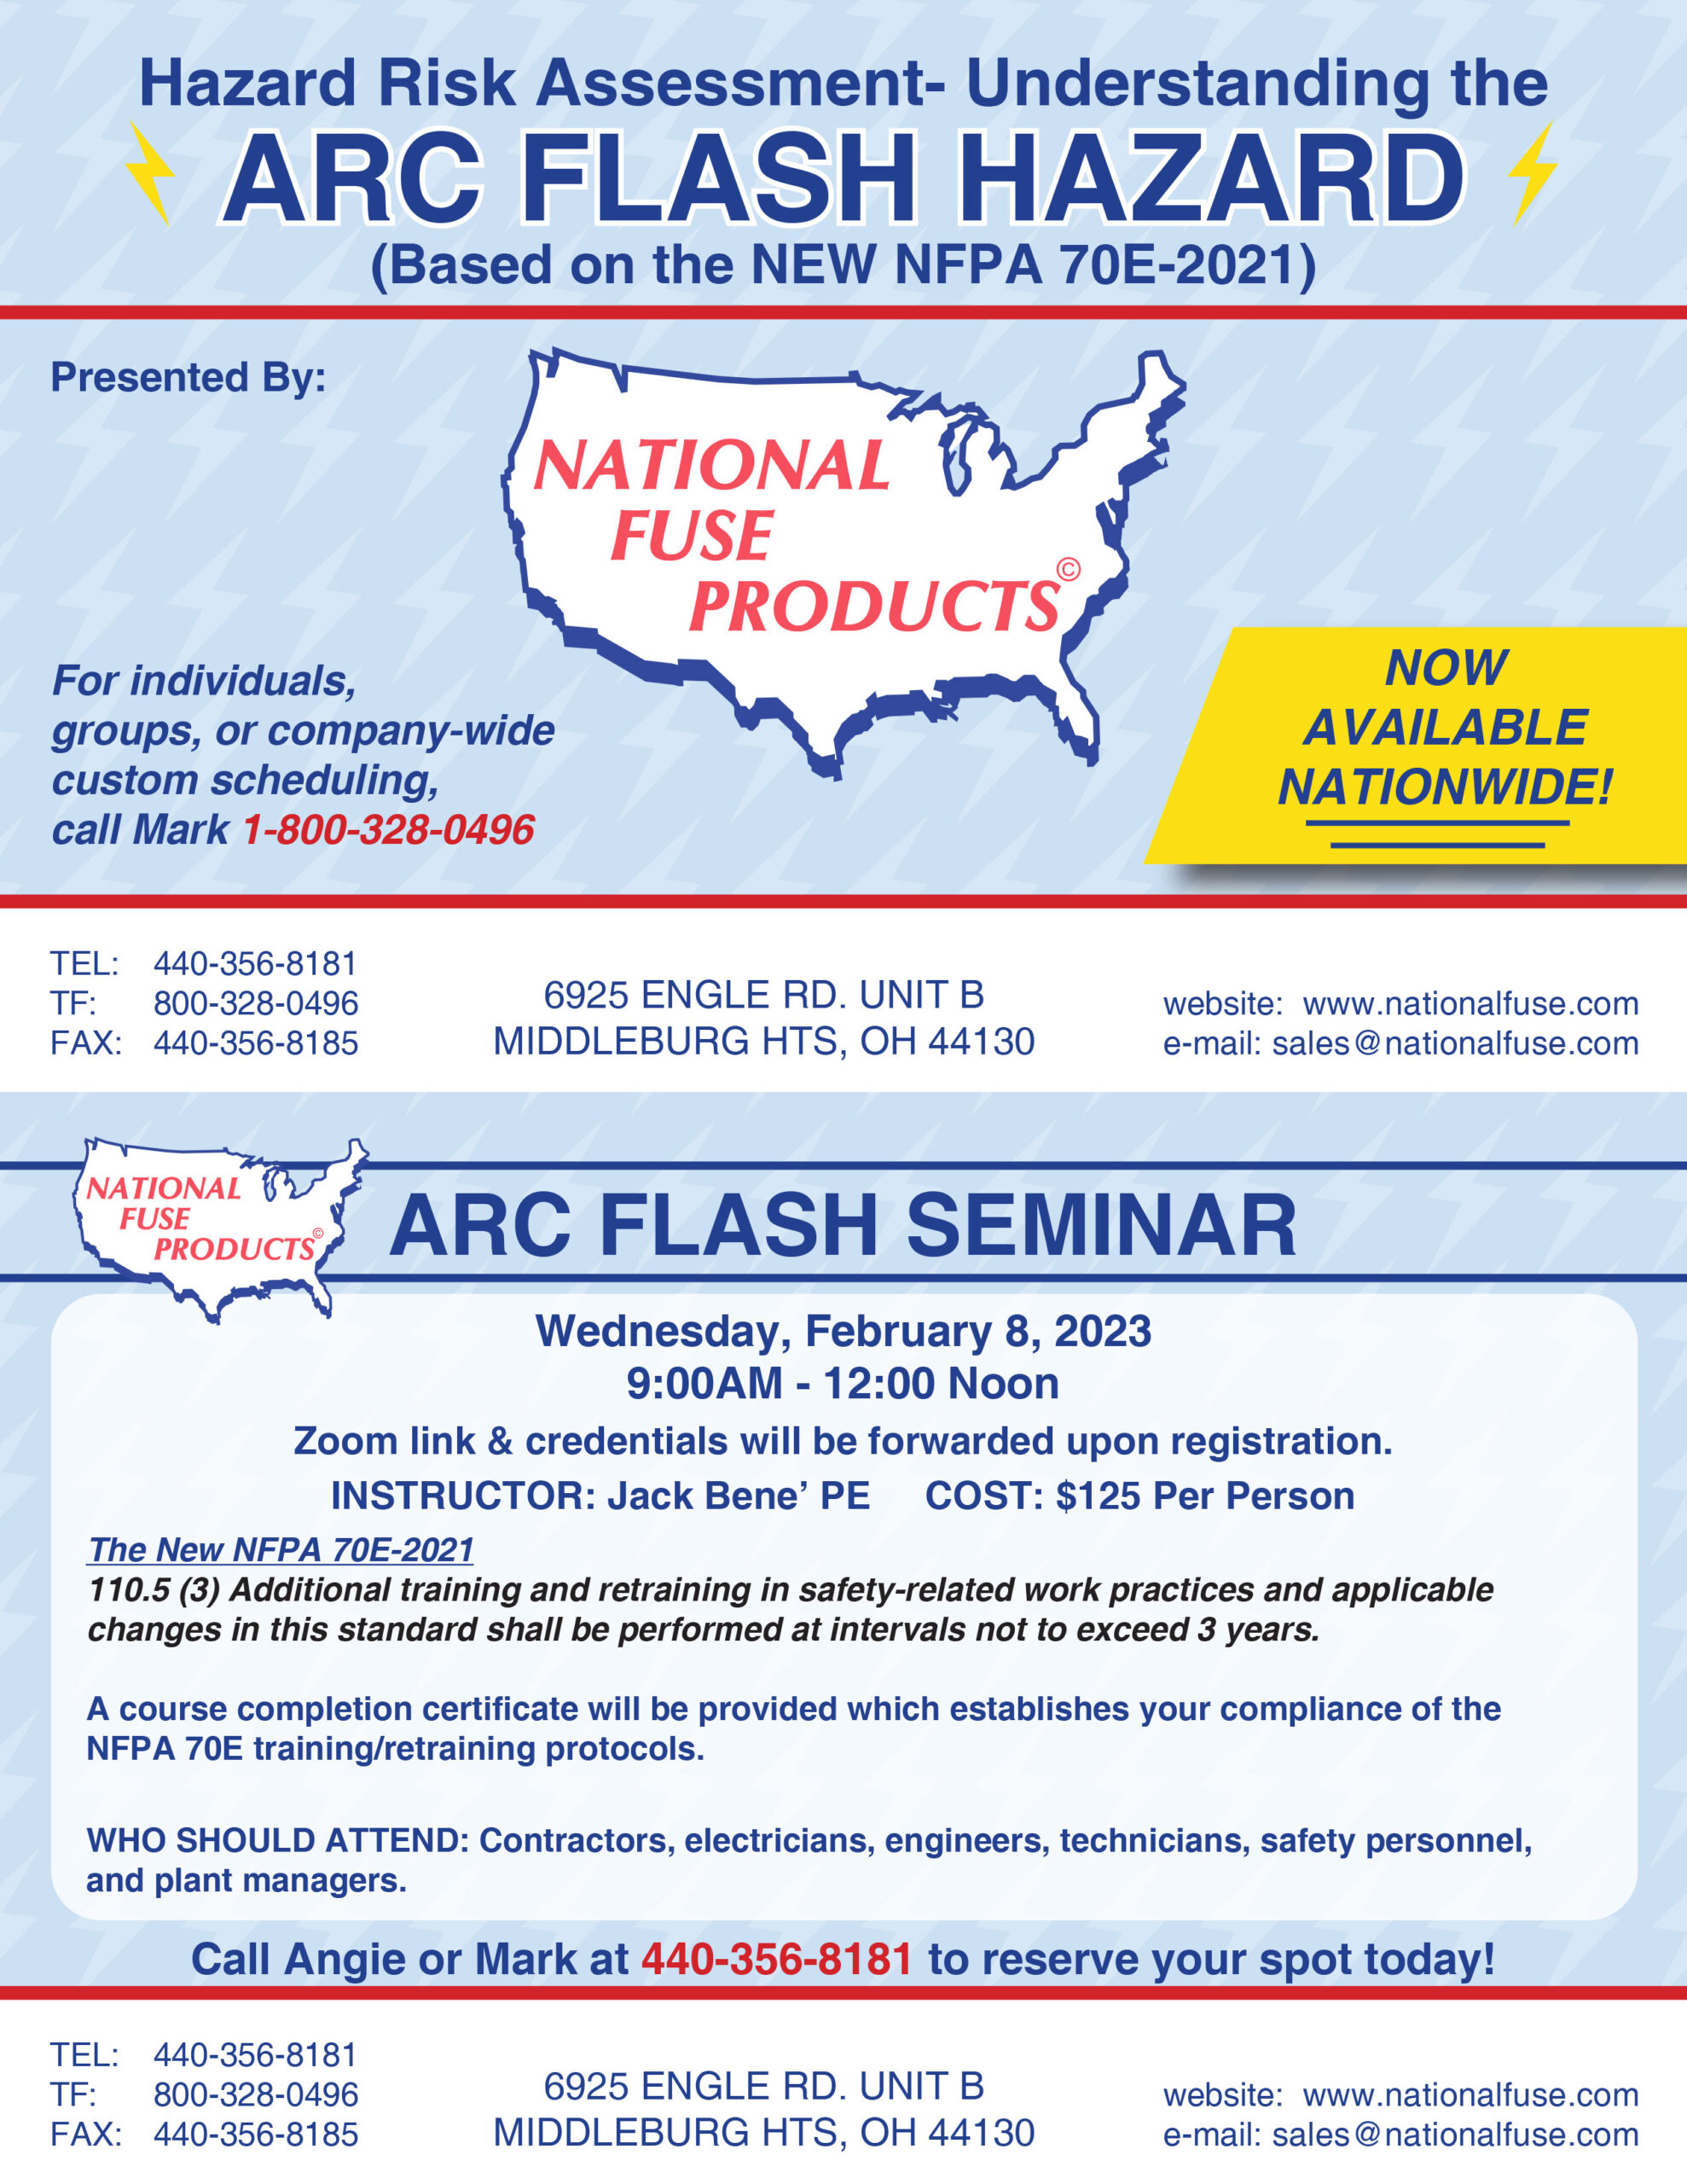 ARC Flash Seminar Via Zoom